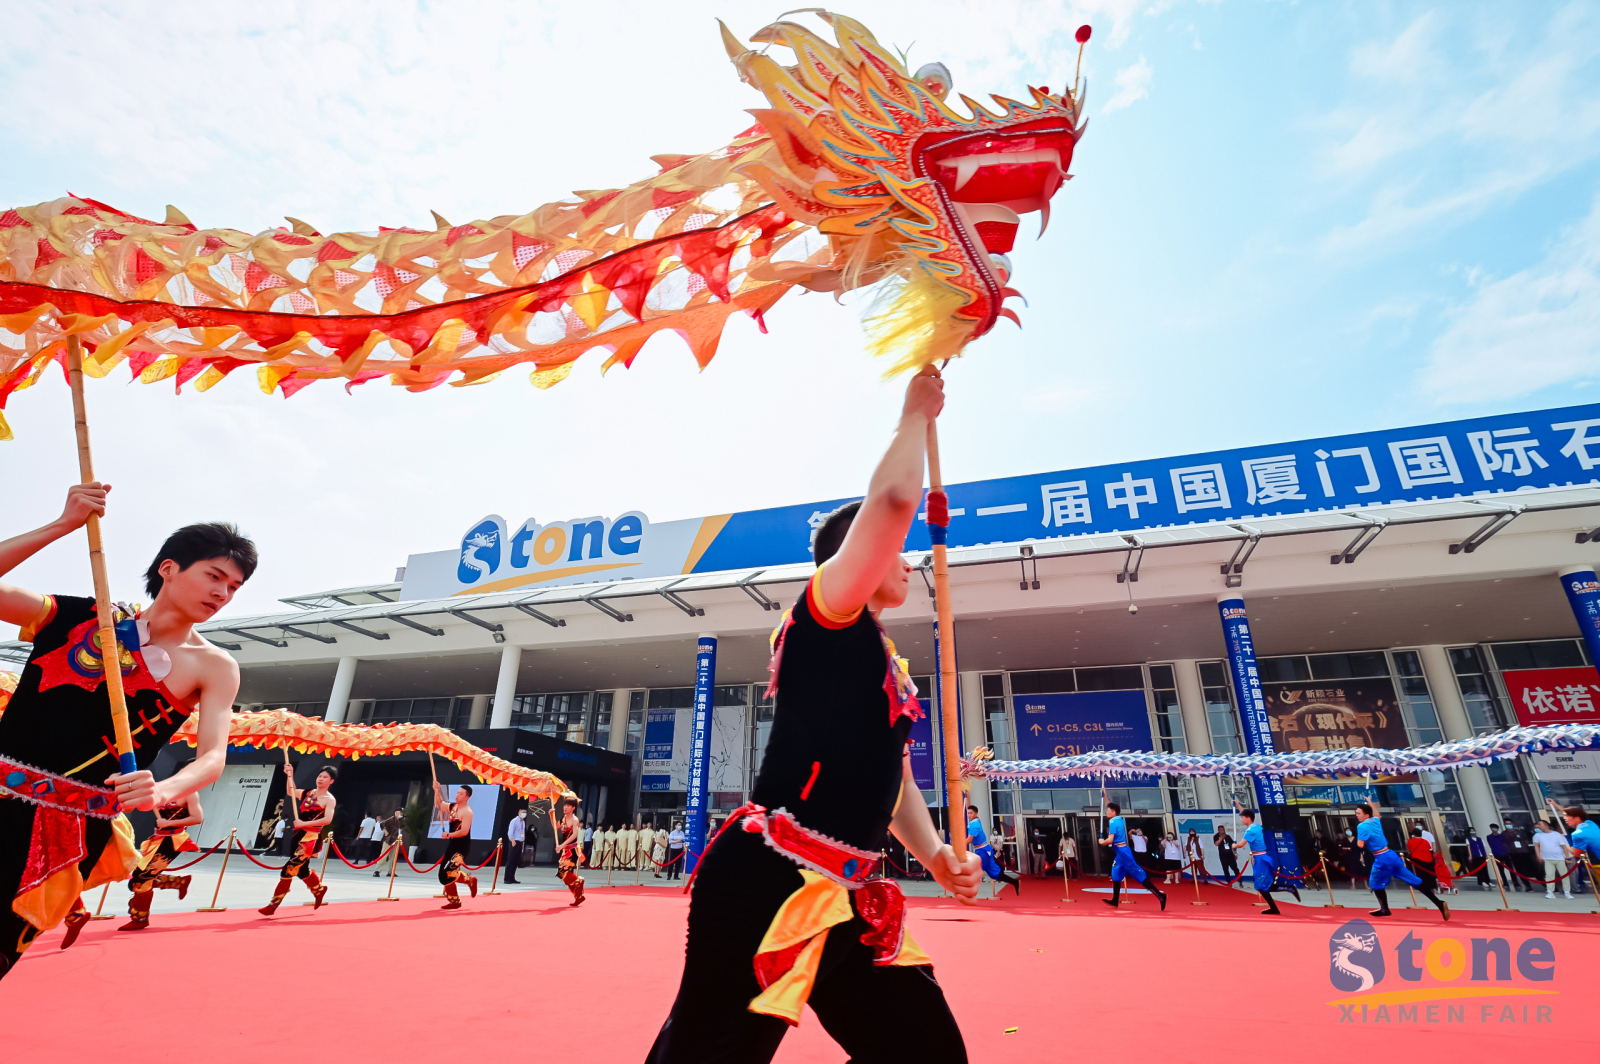 1,100 companies exhibit as Xiamen Stone Fair returns to the showground